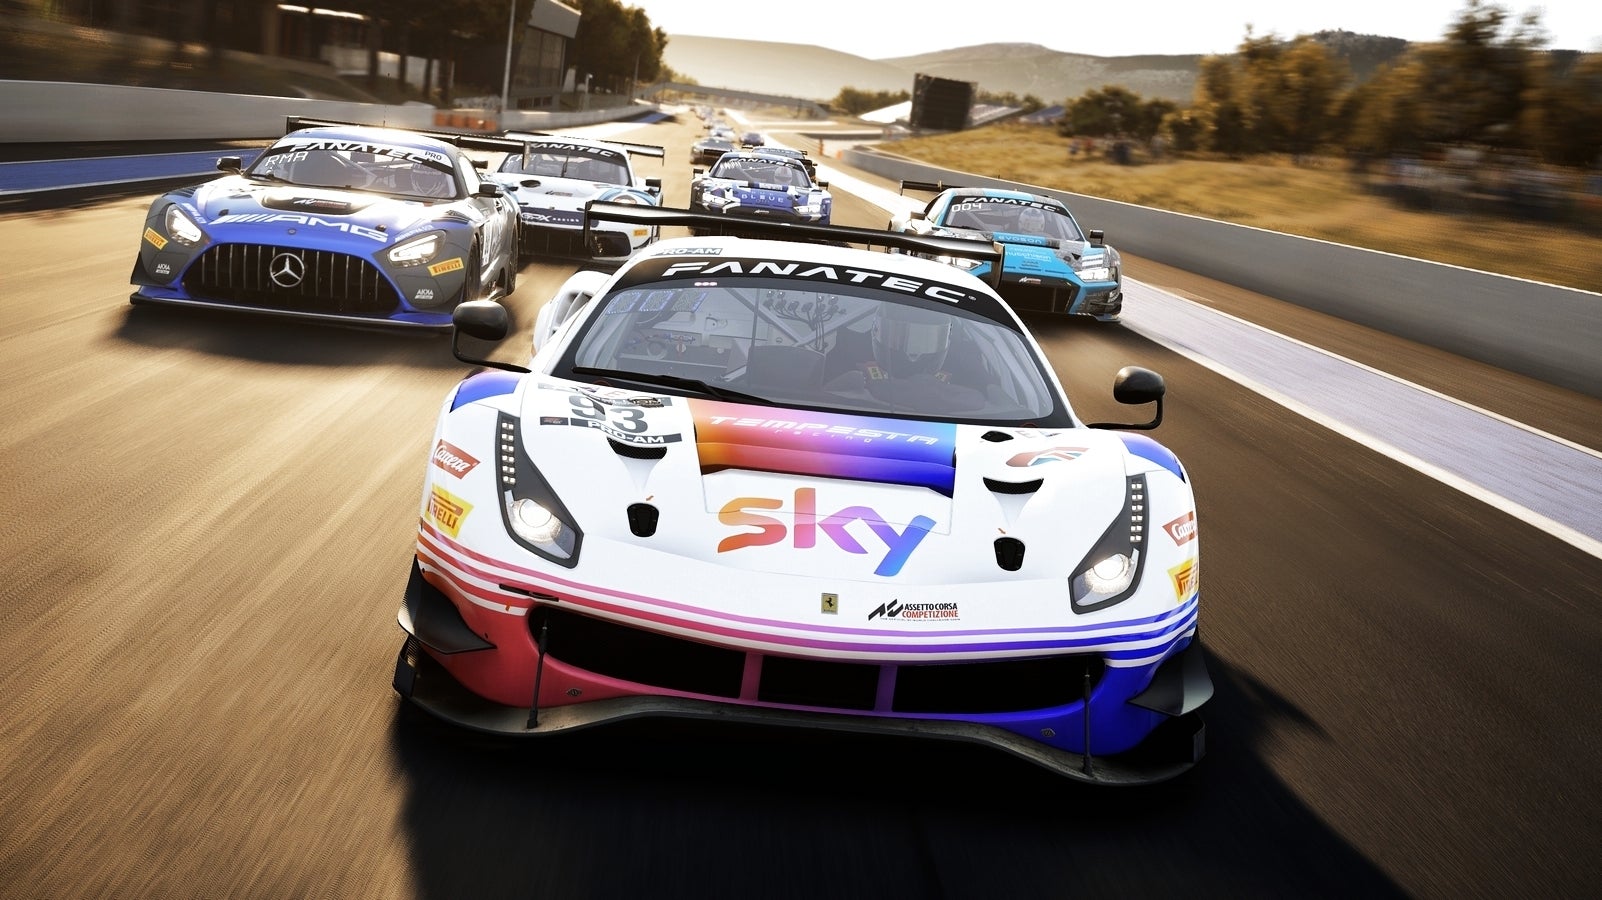 Bilder zu Assetto Corsa Competizione rast auf PS5 und Xbox Series X/S - Release im Februar 2022